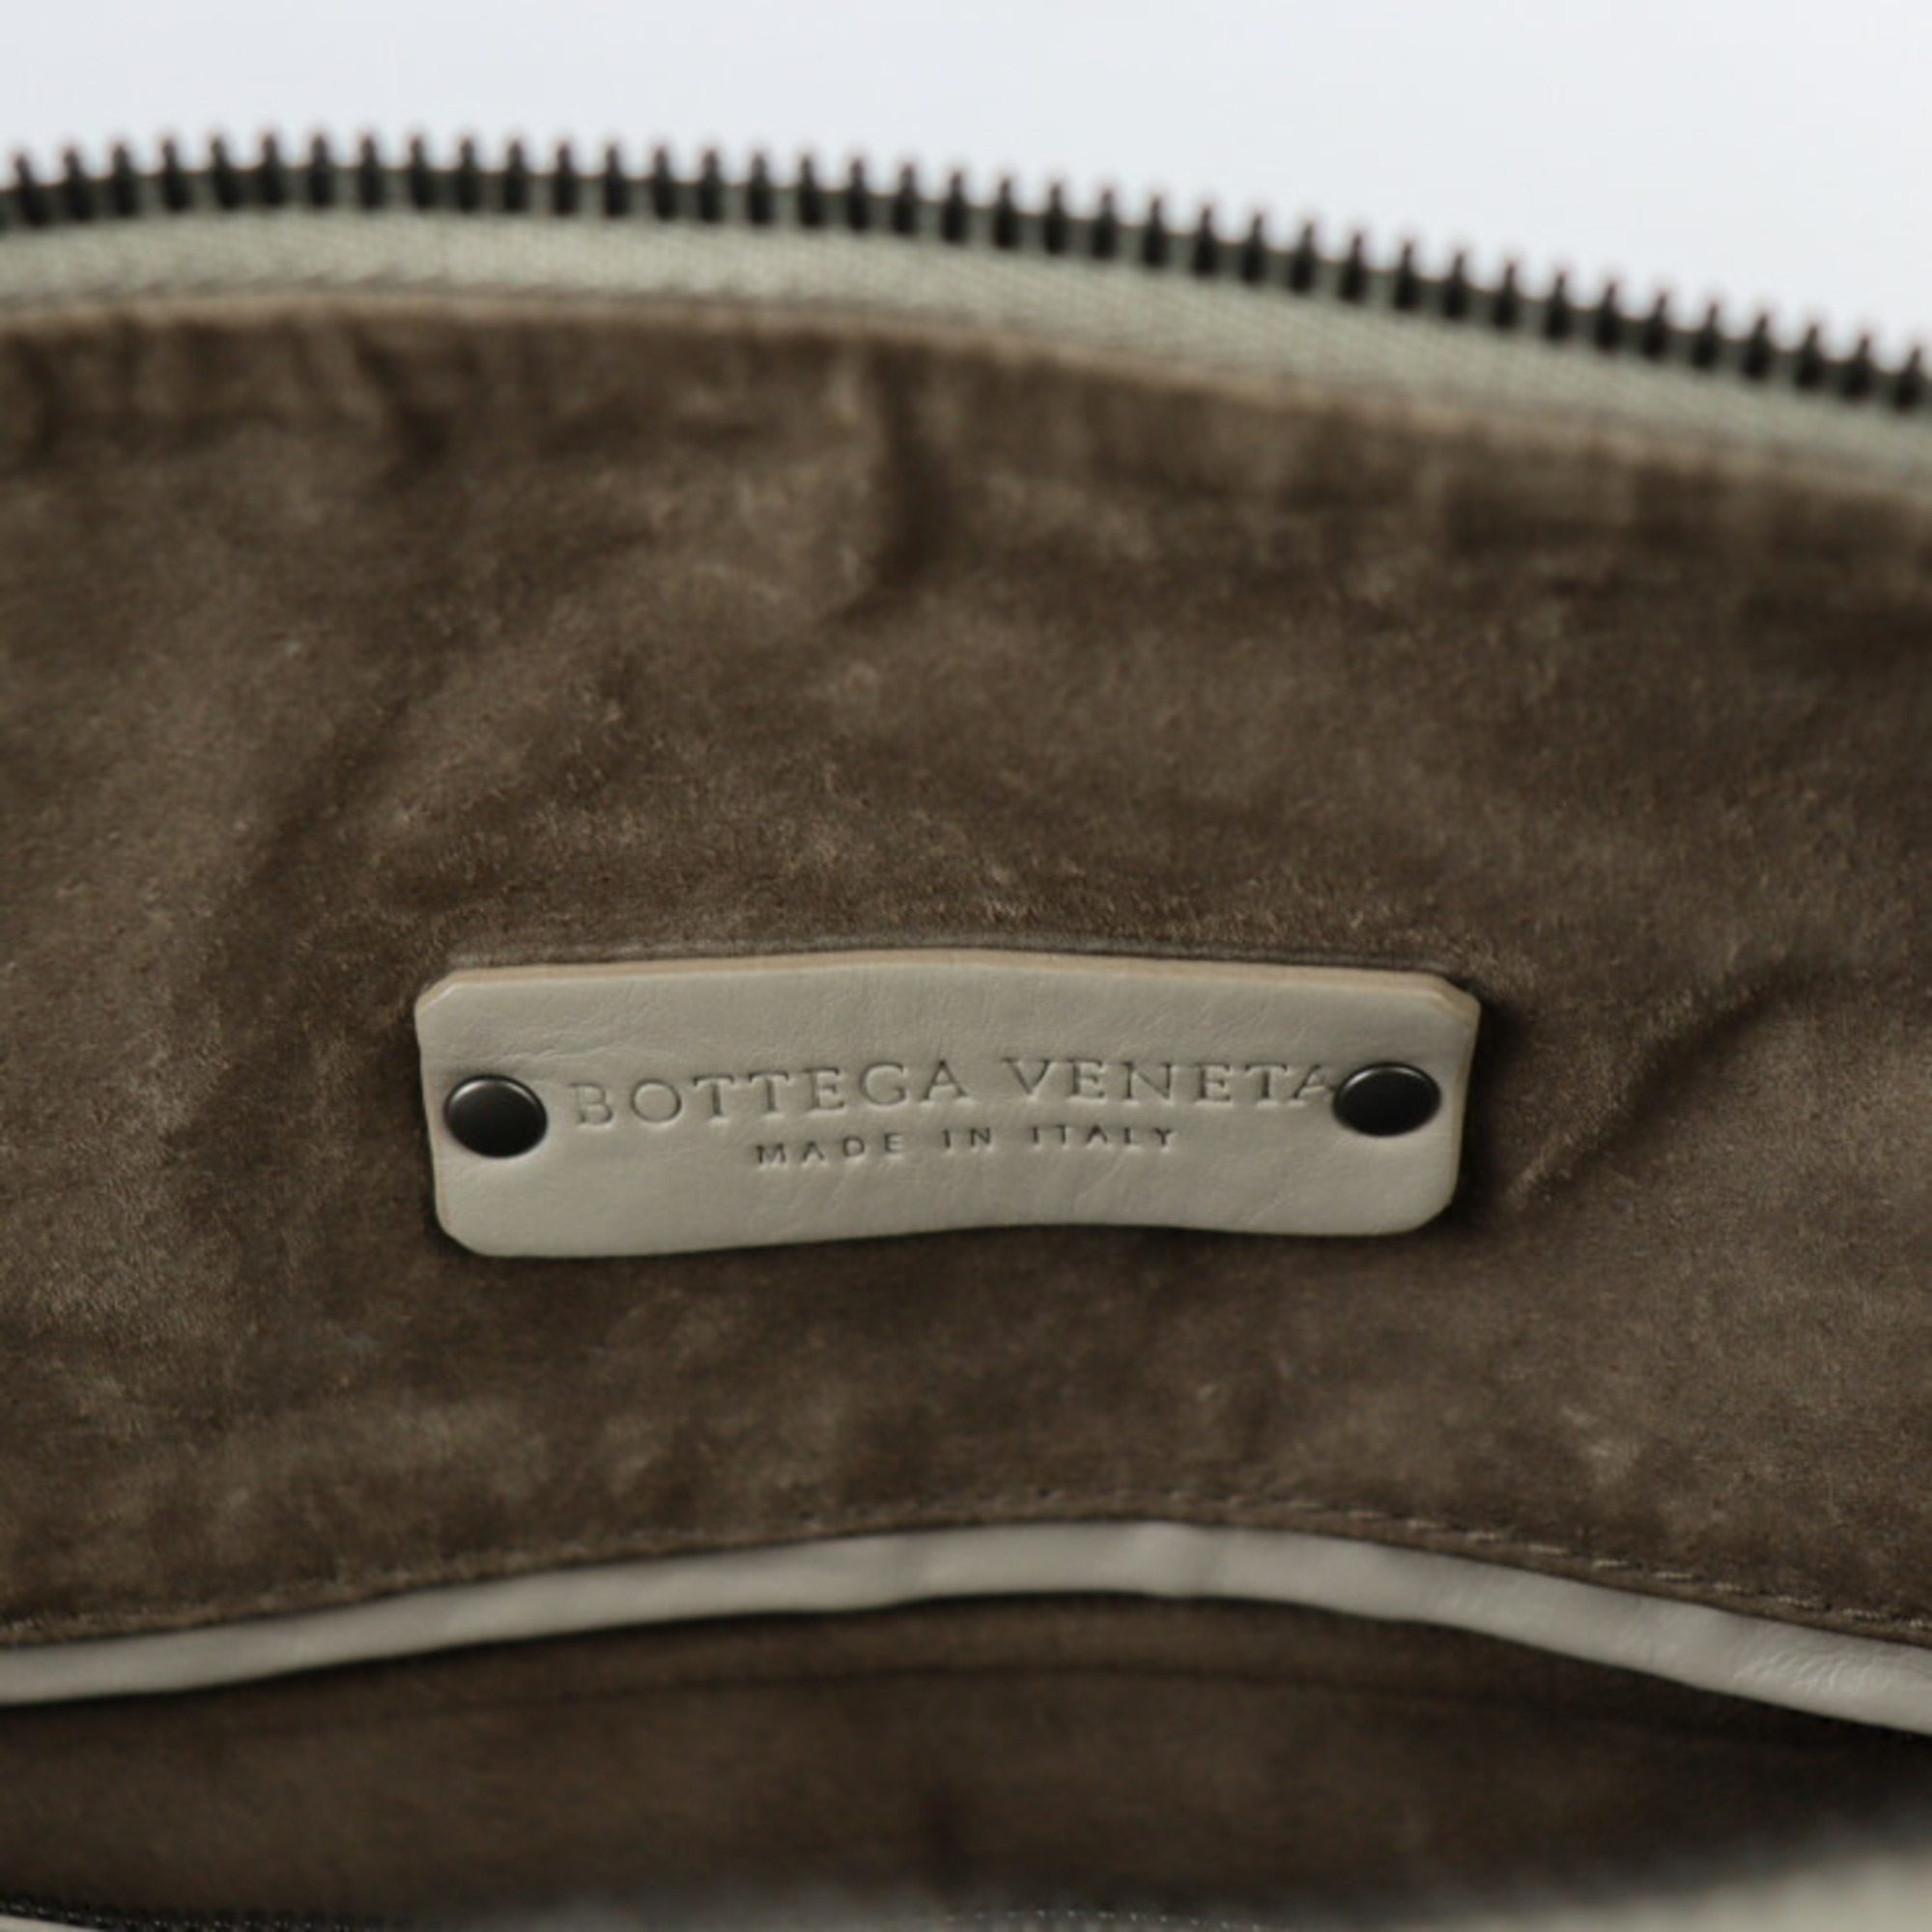 BOTTEGA VENETA Bottega Veneta Prusse Intrecciato Handbag 283363 Leather Light Gray Series Mini Boston Bag